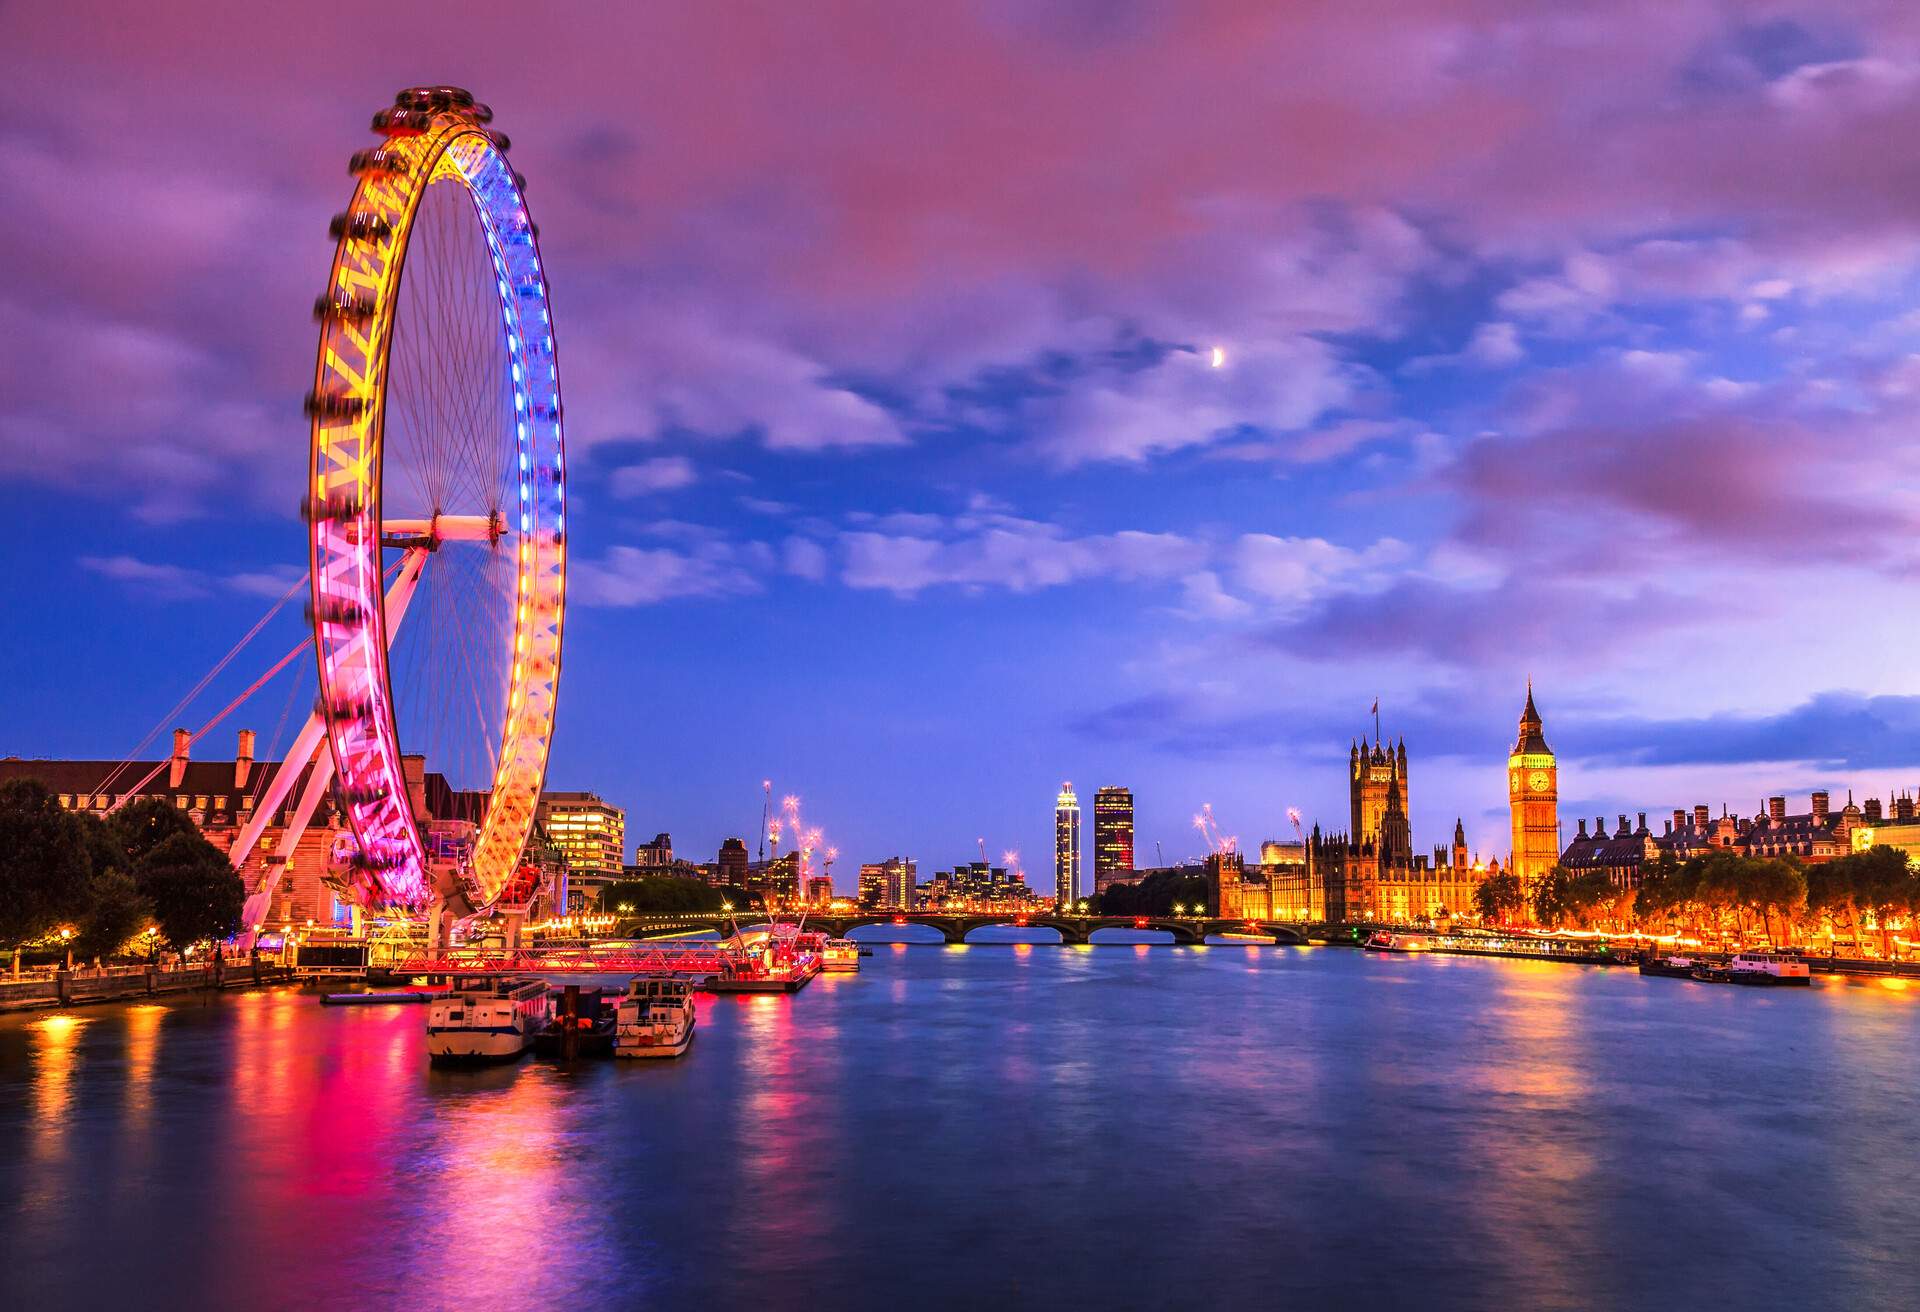 London at twilight. London eye, County Hall, Westminster Bridge, Big Ben and Houses of Parliament.; Shutterstock ID 366175394; Purpose: London Eye; Brand (KAYAK, Momondo, Any): Any